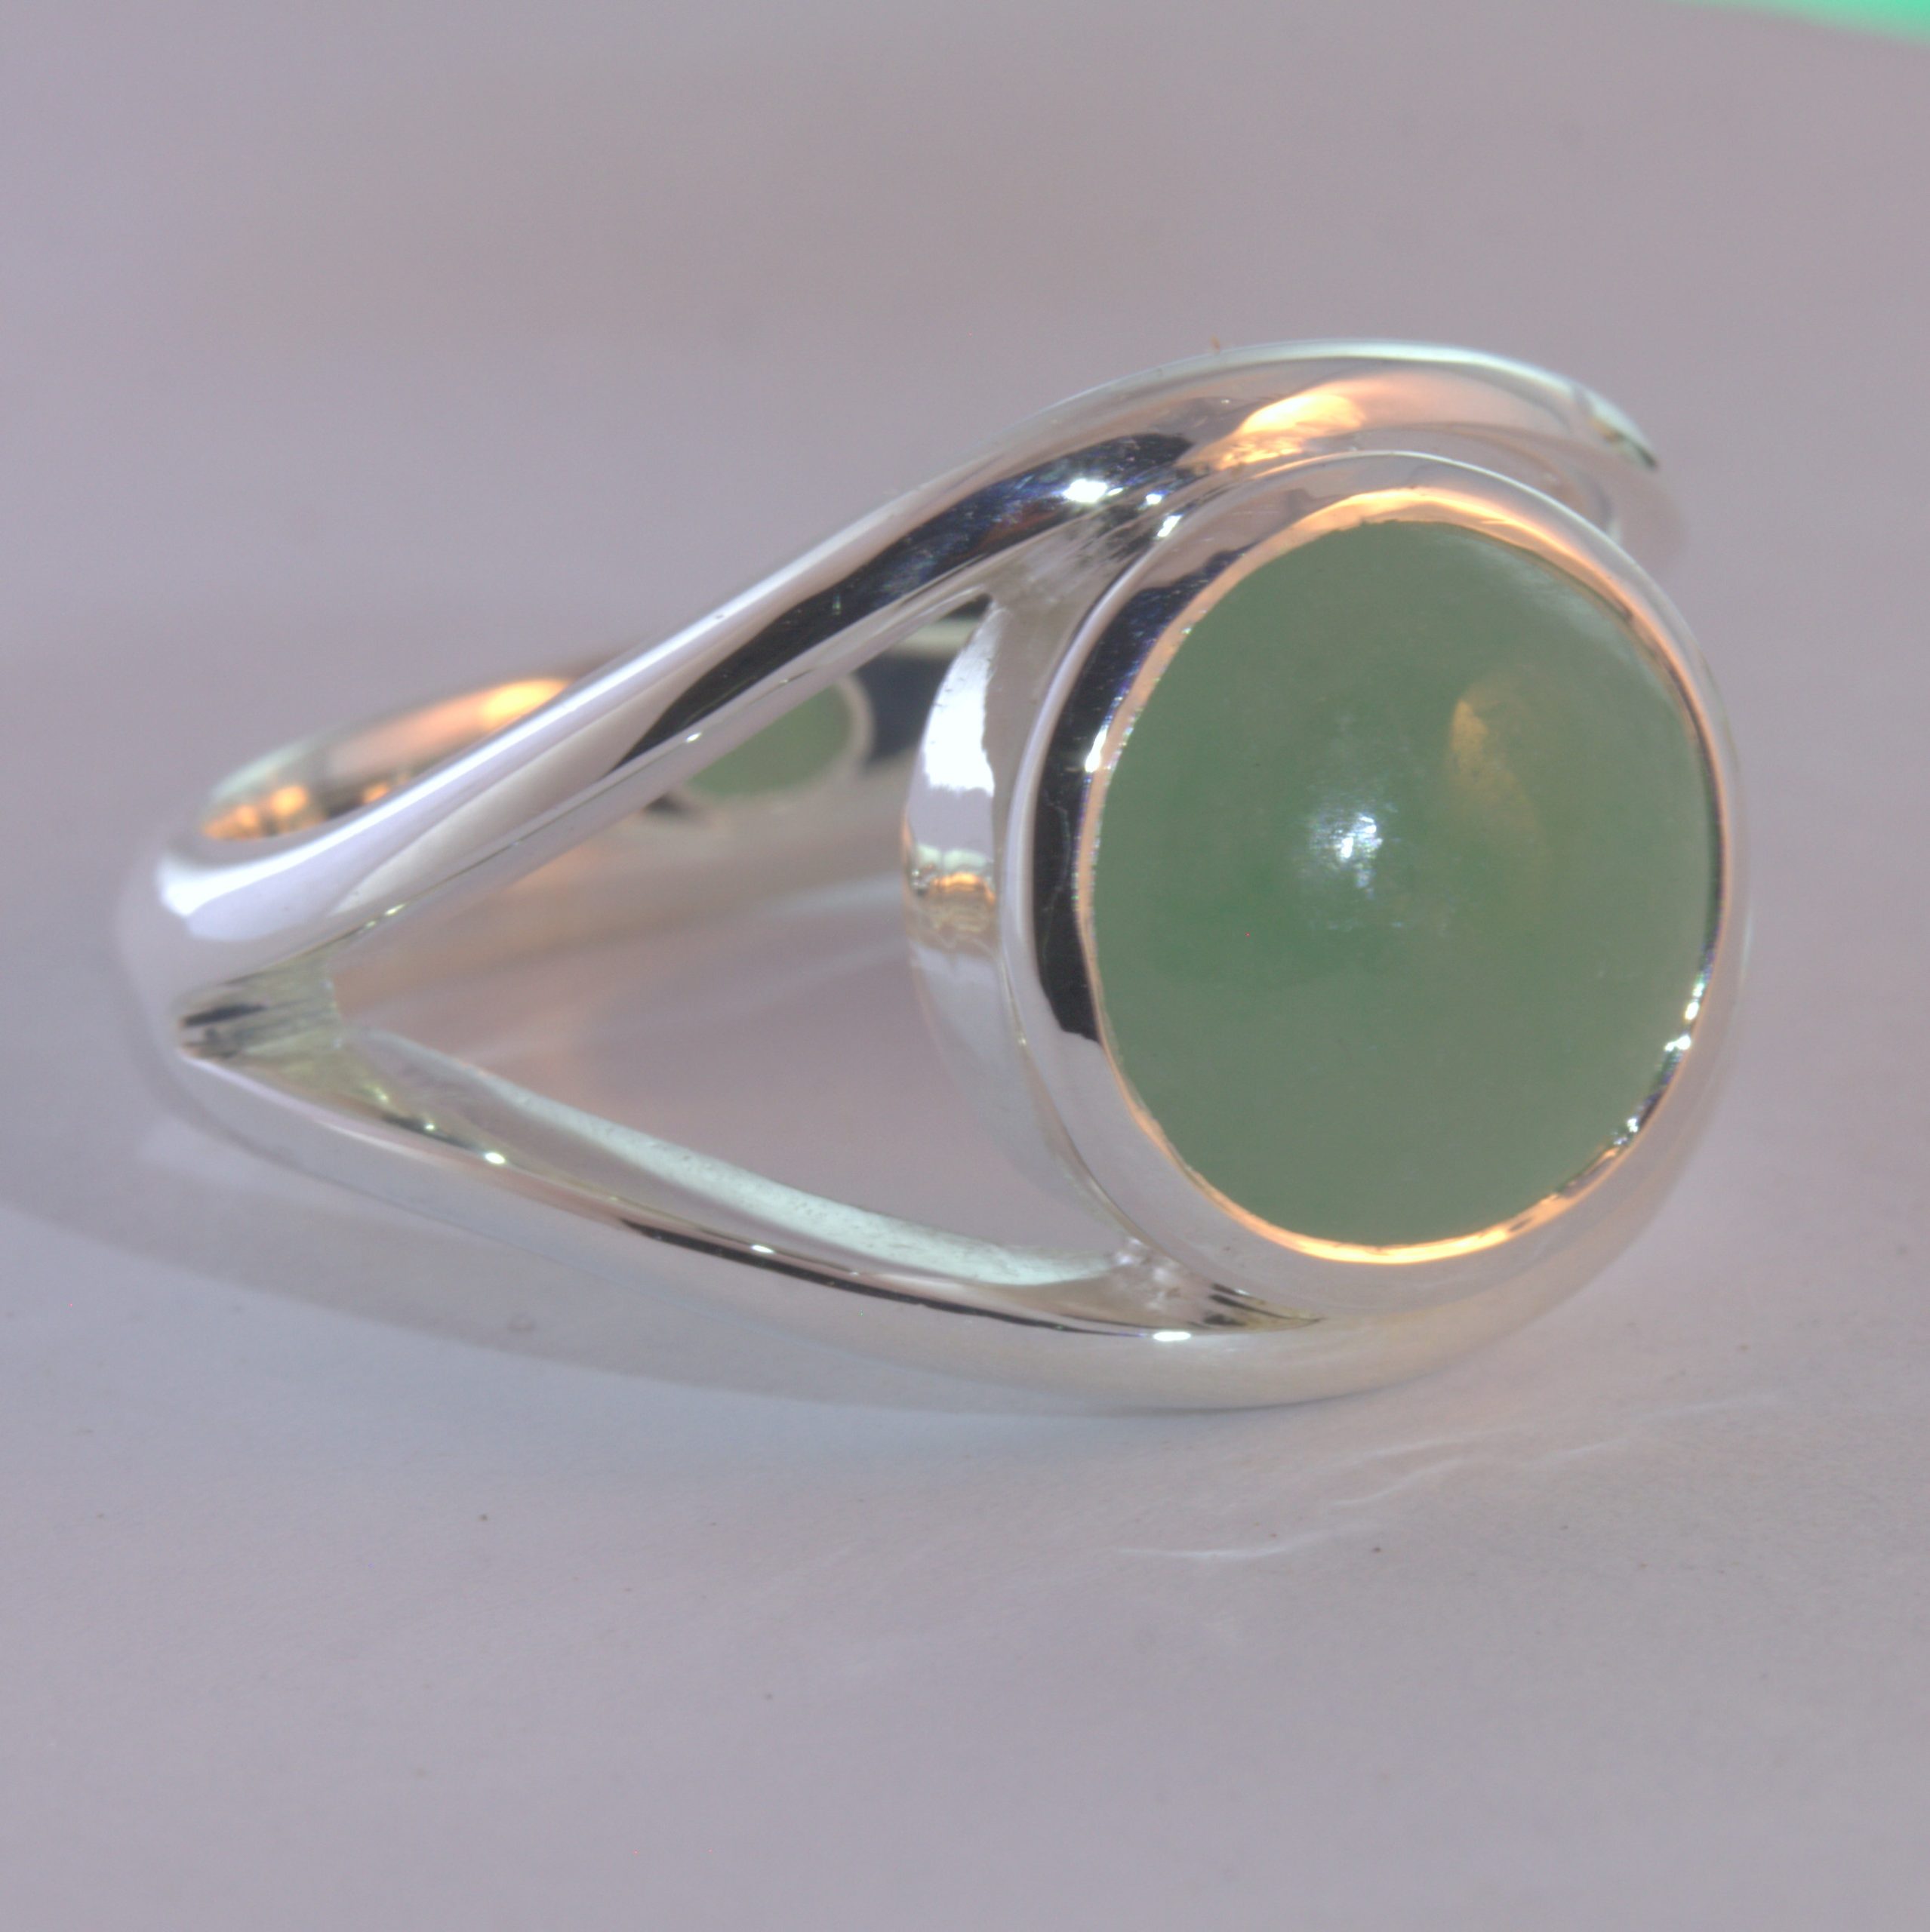 Jade Ring Burma Untreated Jadeite Handcrafted 925 Size 9.25 Infinity Design 101